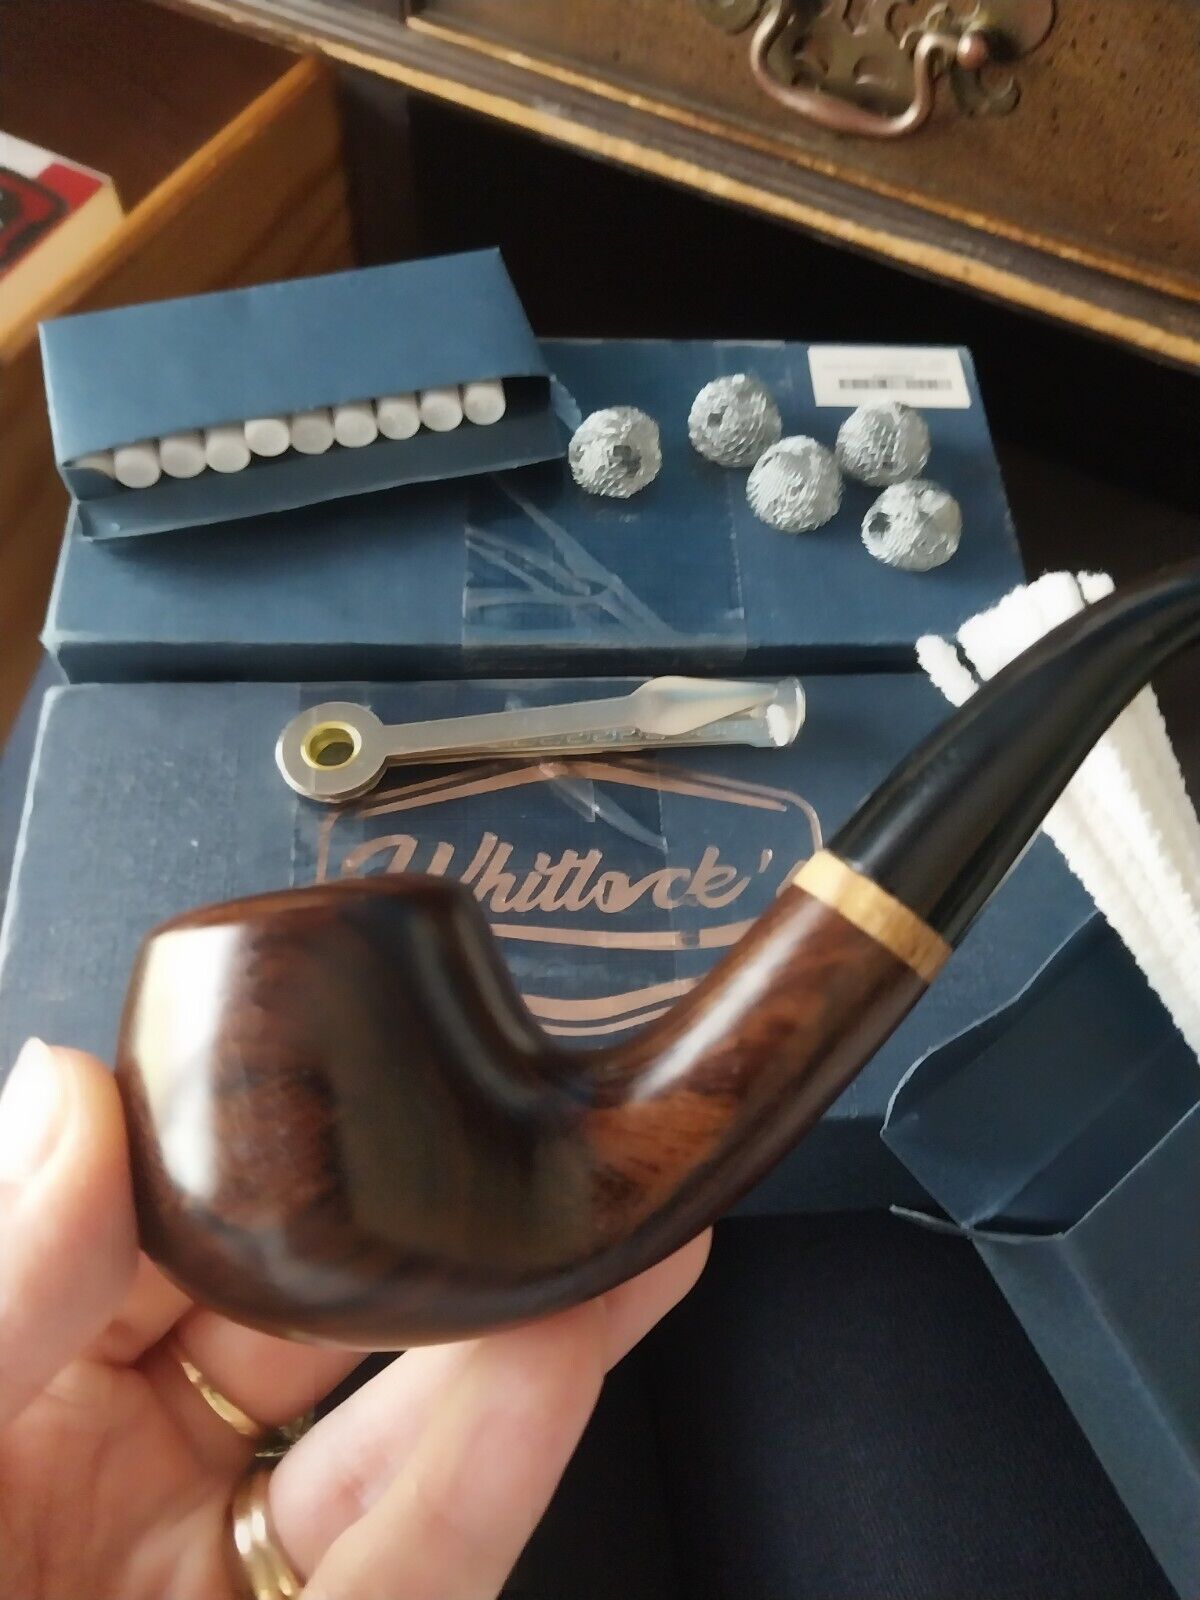 Whitlock‘s Smoking Pipe Complete Kit Never Smoked